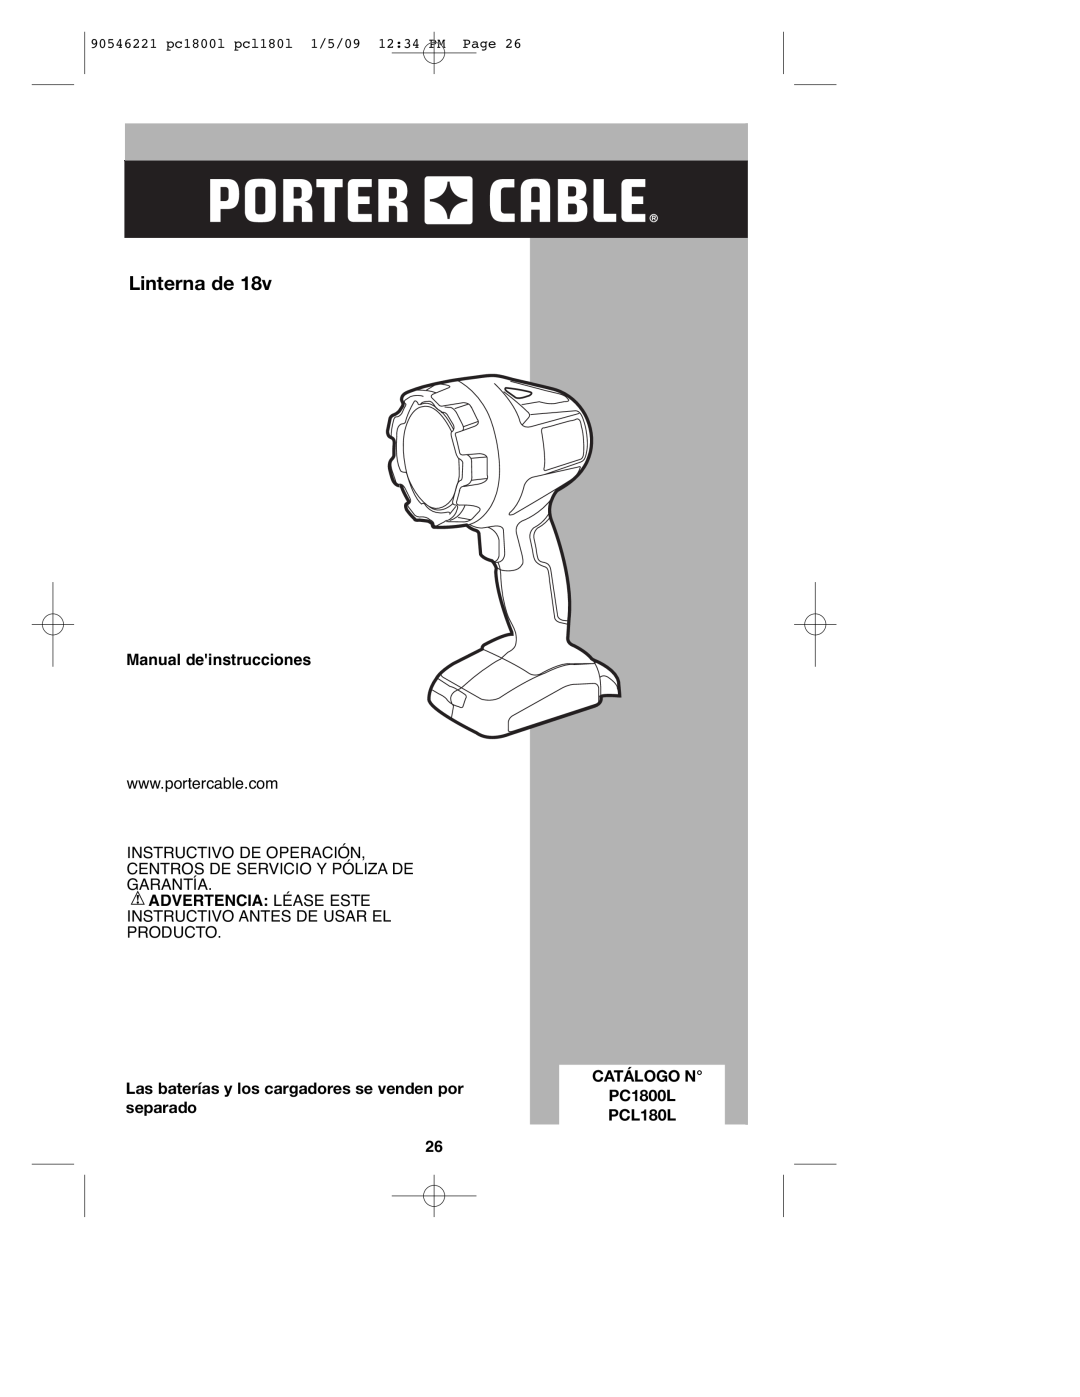 Porter-Cable 90546221 Linterna de, Manual deinstrucciones, Advertencia: Léase Este, CATÁLOGO N PC1800L PCL180L 